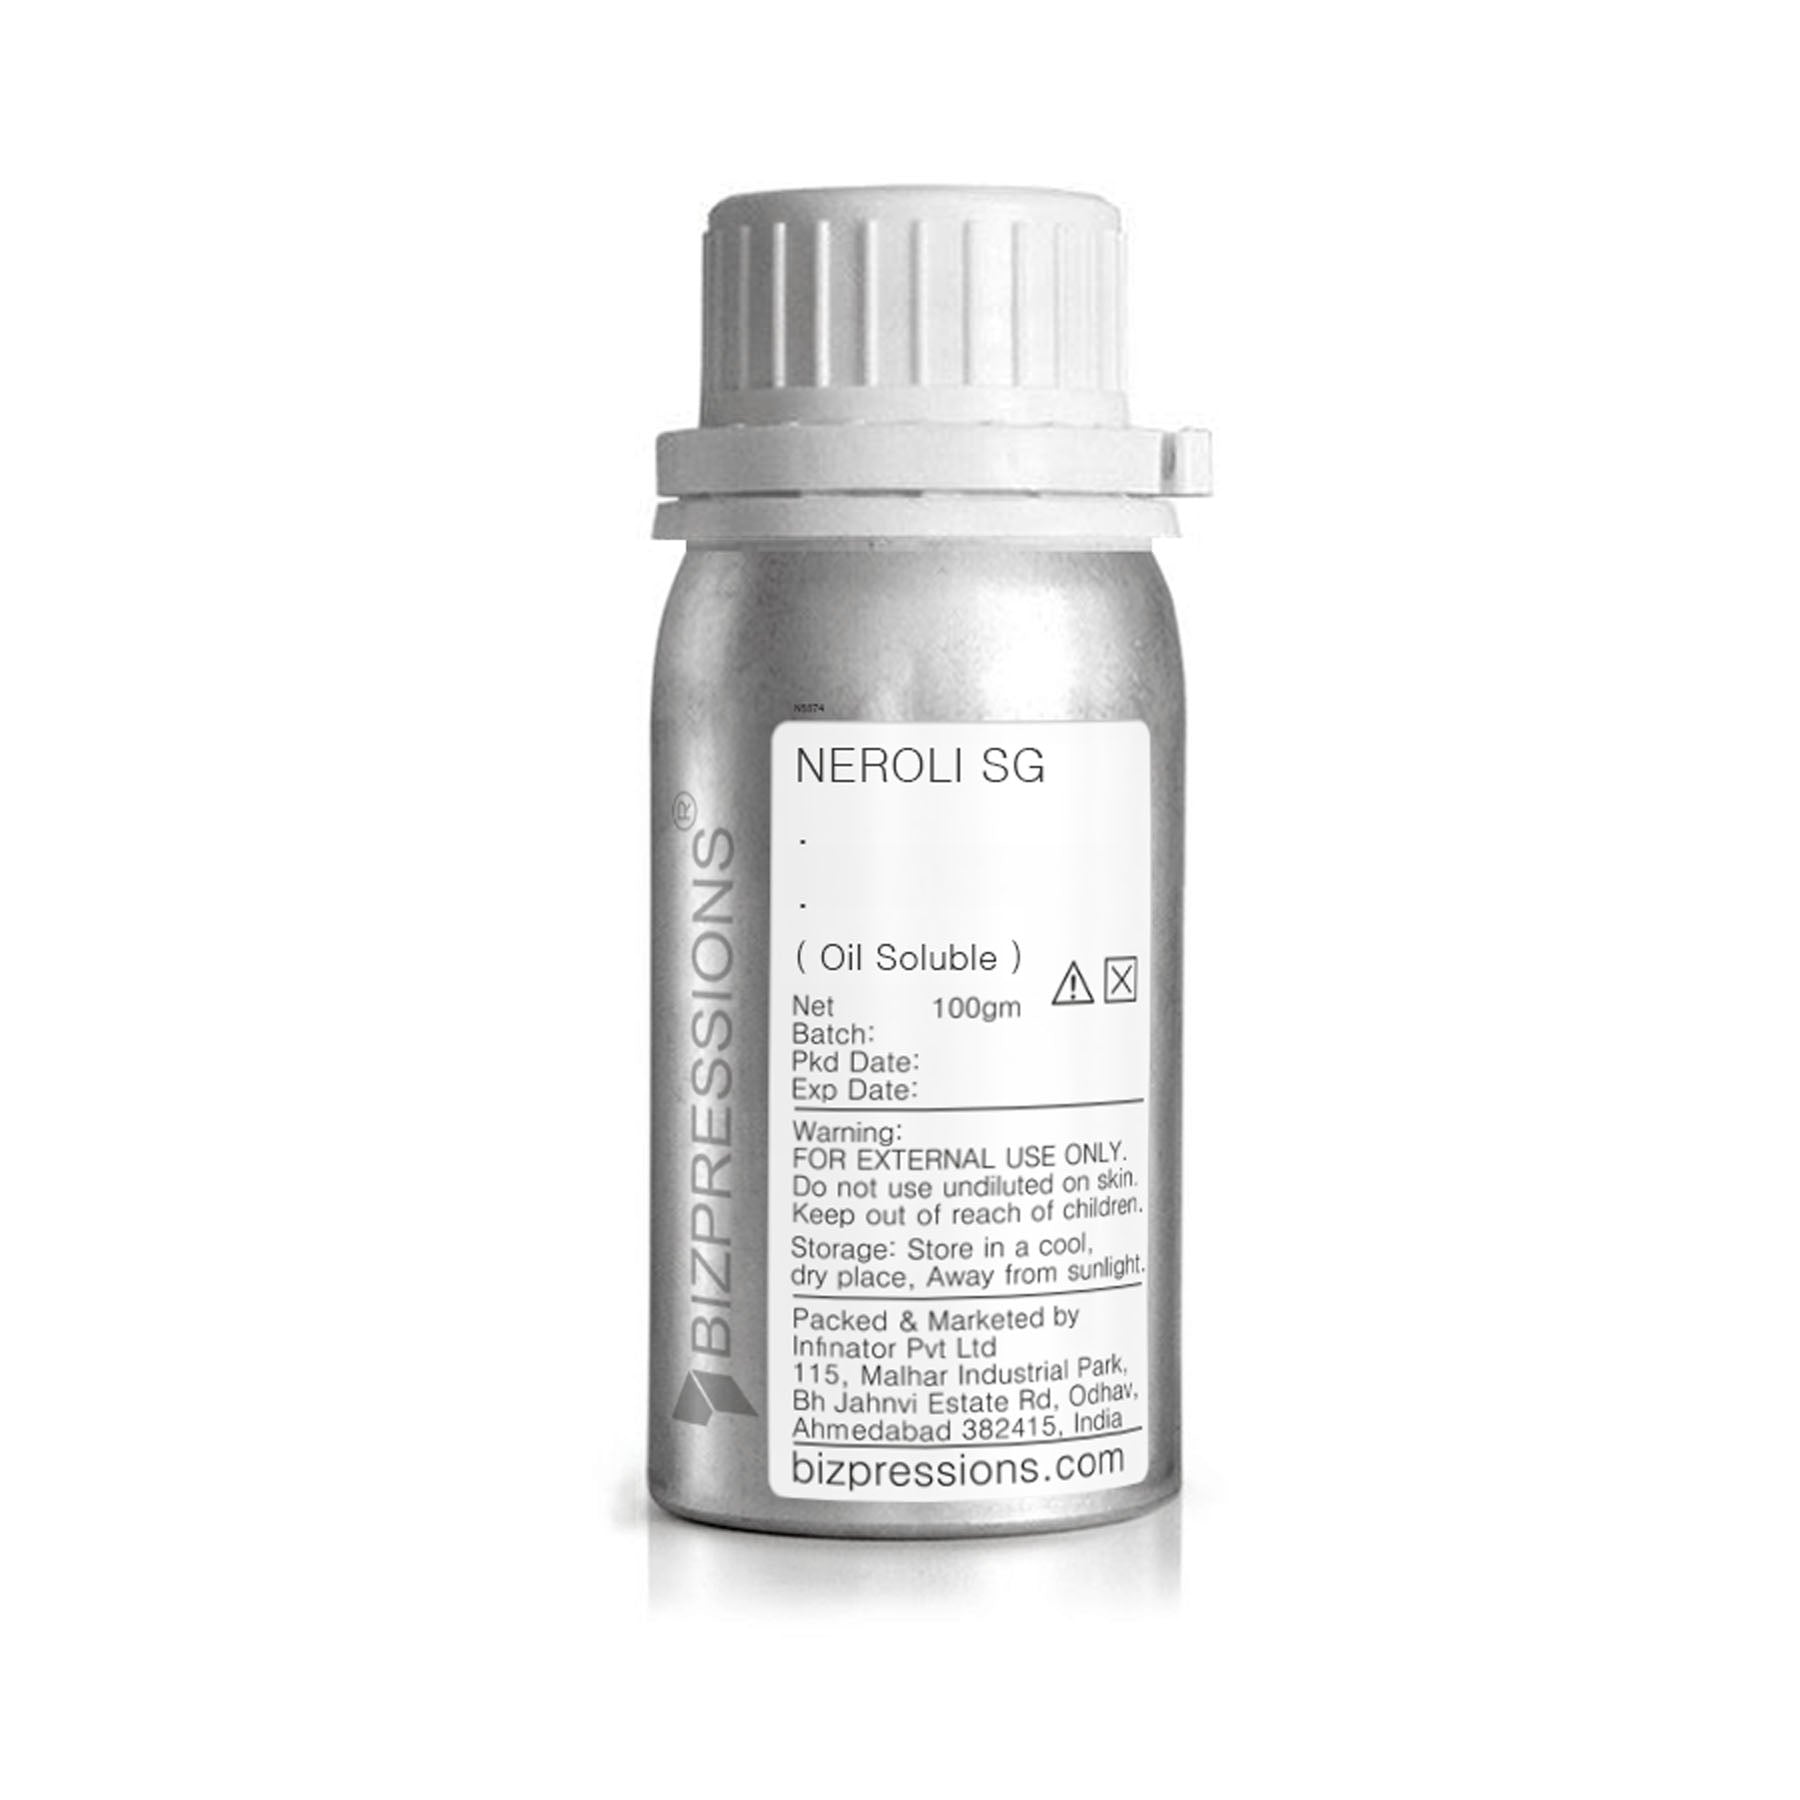 NEROLI SG - Fragrance ( Oil Soluble ) - 100 gm